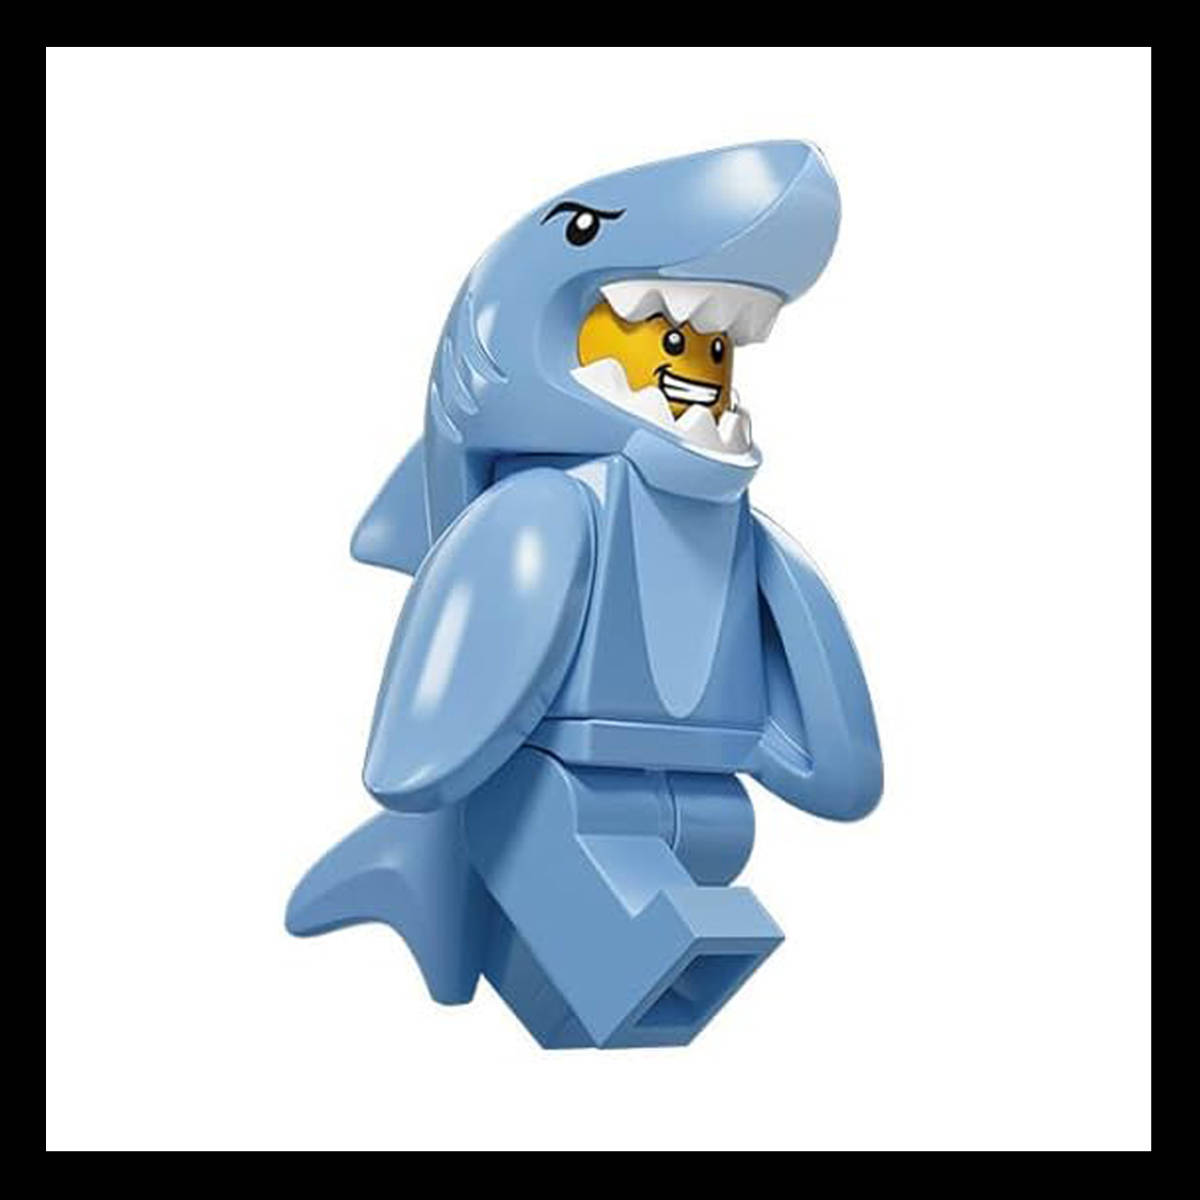 LEGO 正規品 新品 ミニフィグ シリーズ15 サメ男 同梱可能 レゴ minifigures ミニフィギュア 着ぐるみ サメ シャーク マン シャークガイ_画像1